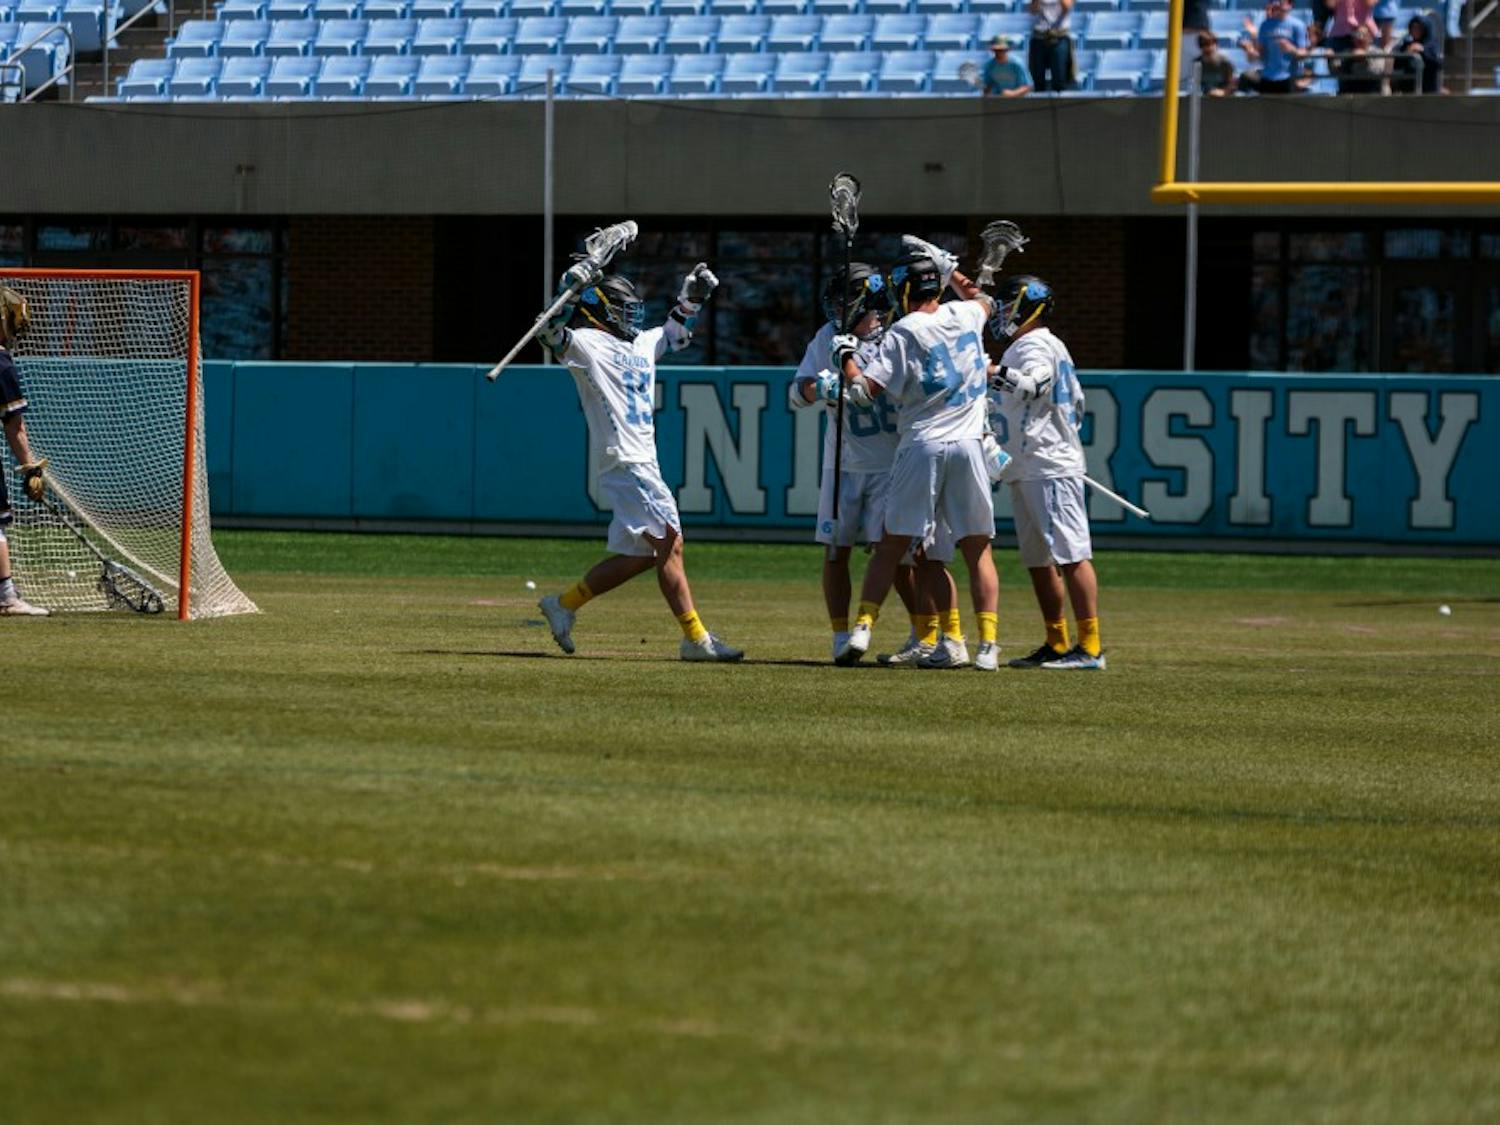 The North Carolina men's lacrosse team celebrates a goal against Notre Dame on April 21 at Kenan Stadium.